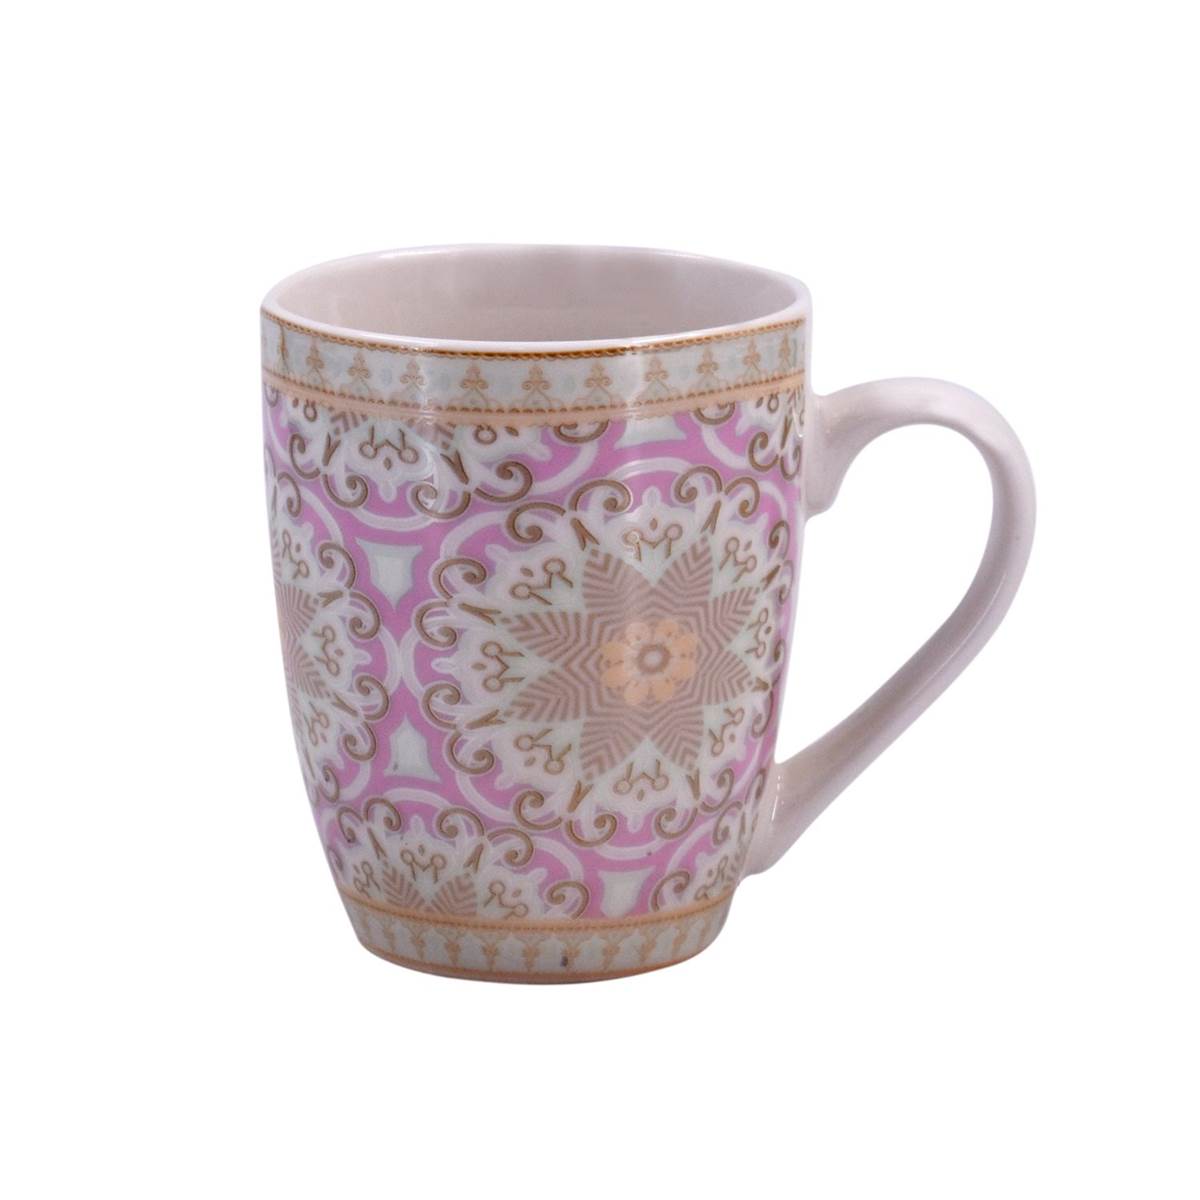 Printed Ceramic Coffee or Tea Mug with handle - 325ml (4134G-D)